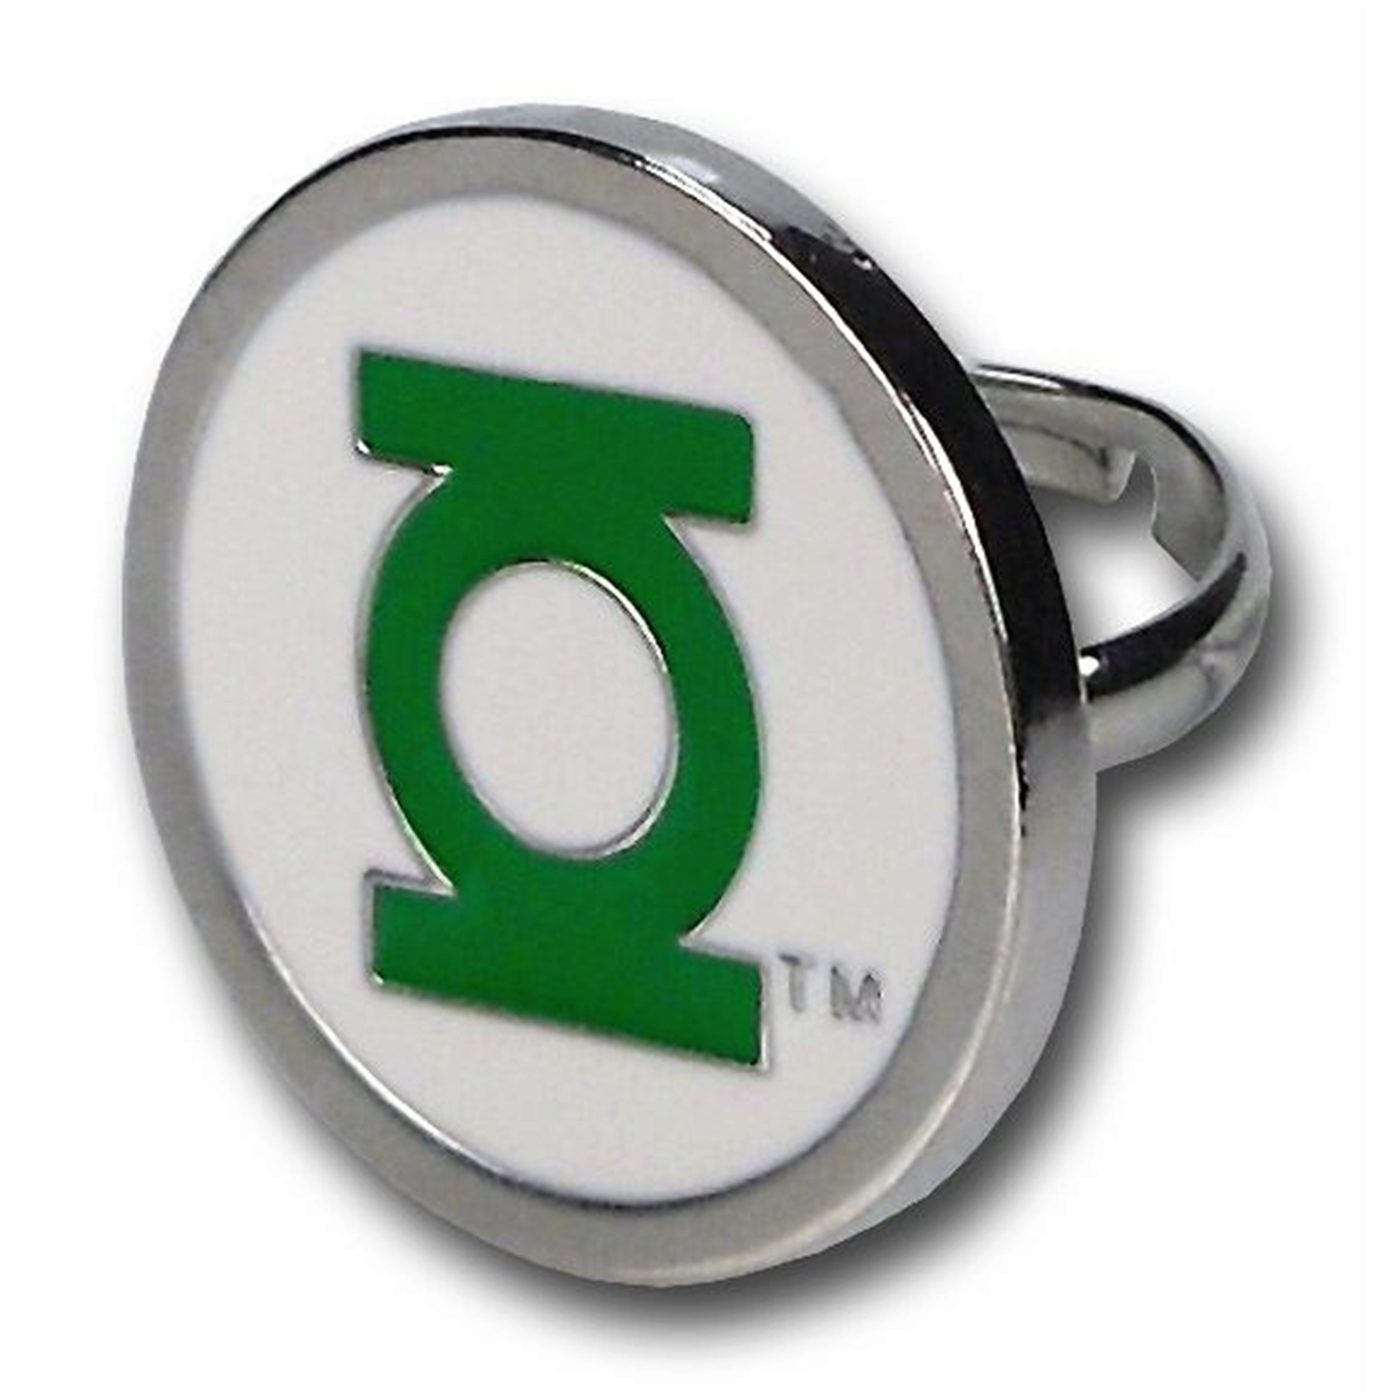 Green Lantern Collector Gift Box